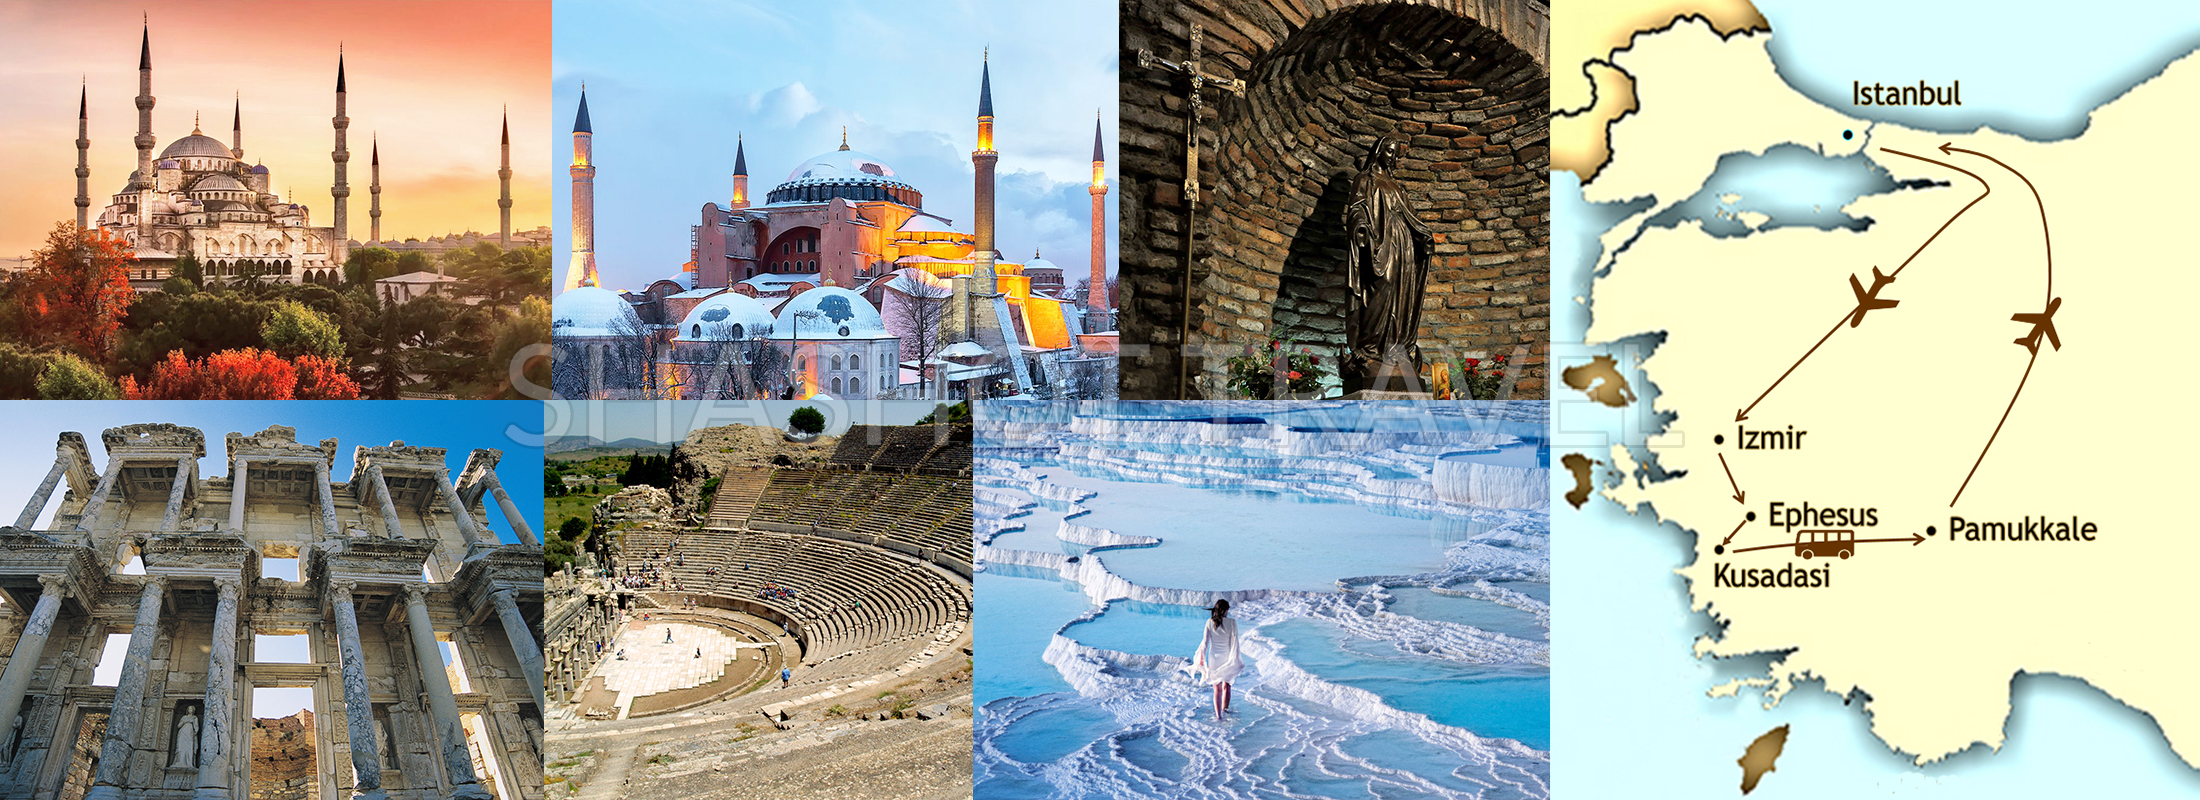 5-DAYS-TURKEY-PACKAGE-TOUR-ISTANBUL-EPHESUS-PAMUKKALE-by-flight-shashot-travel-turkiye-map